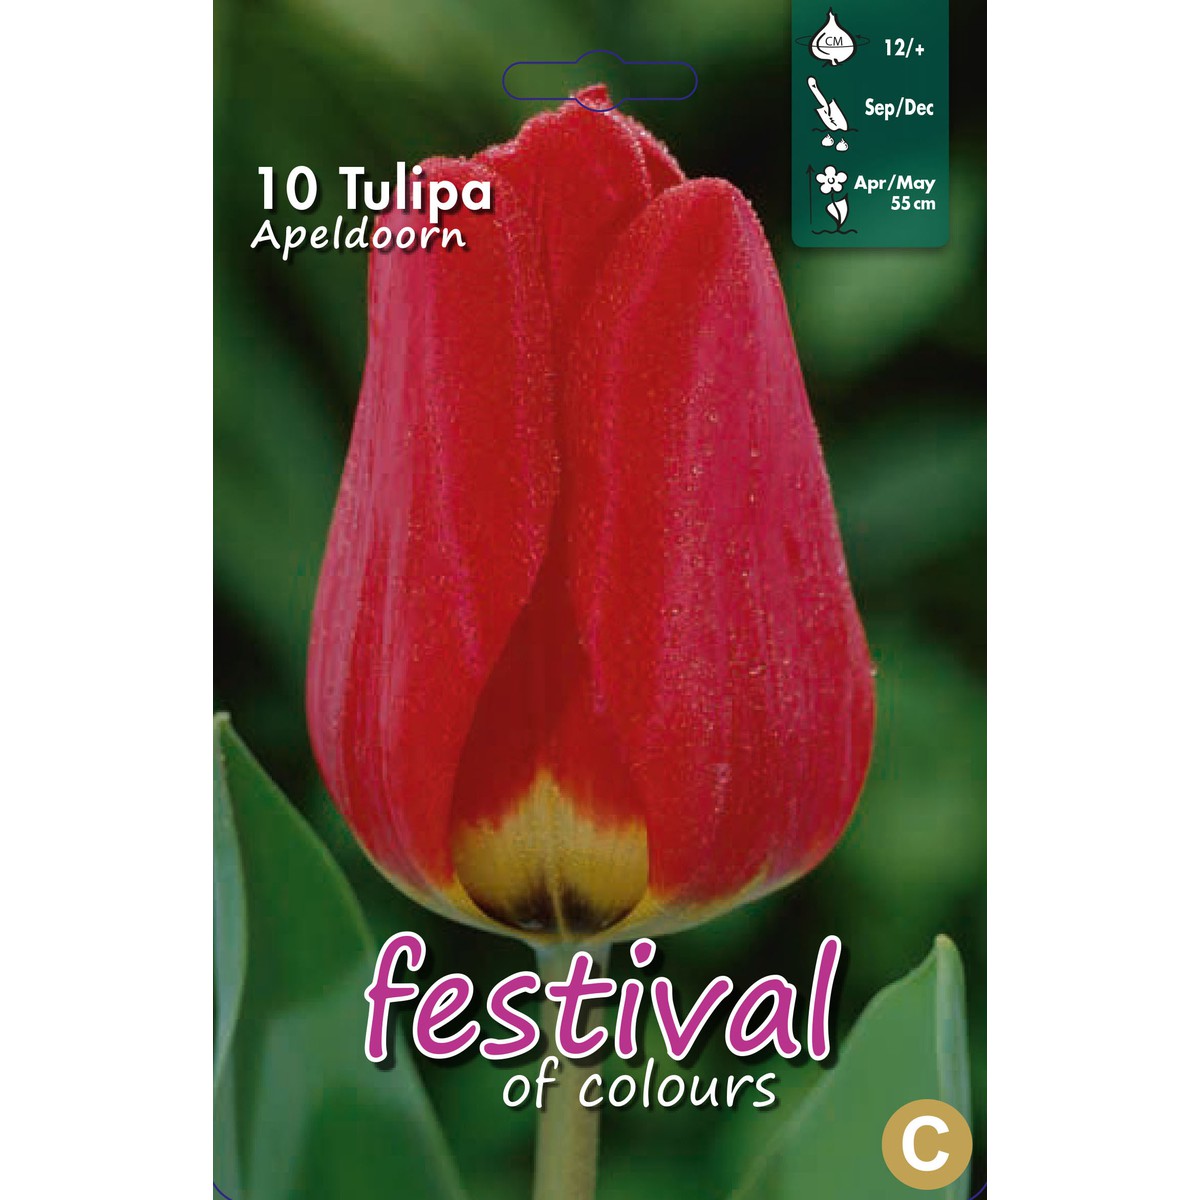   Tulipes 'Apeldoorn'  10 pcs 12/